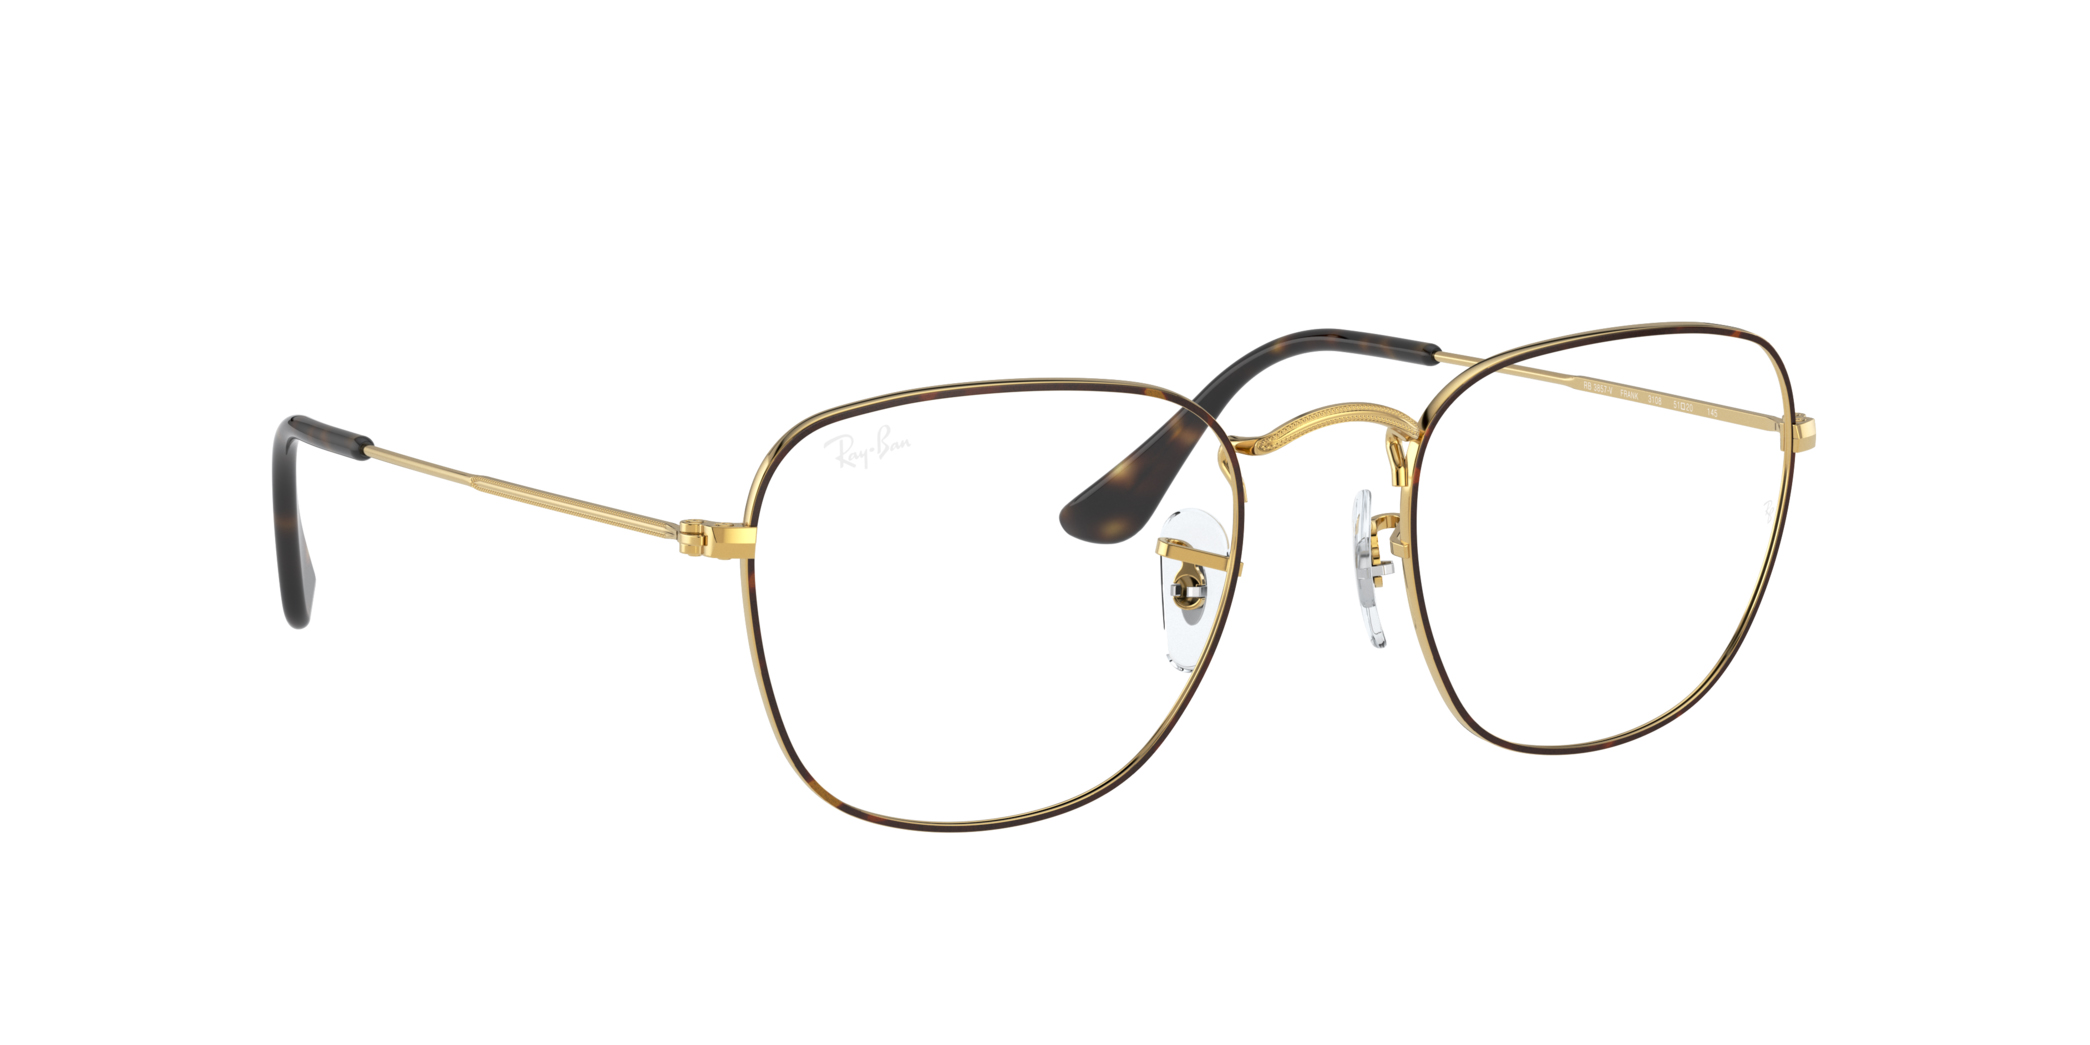 Buy Ray-Ban Frank Optics Eyeglasses Online.